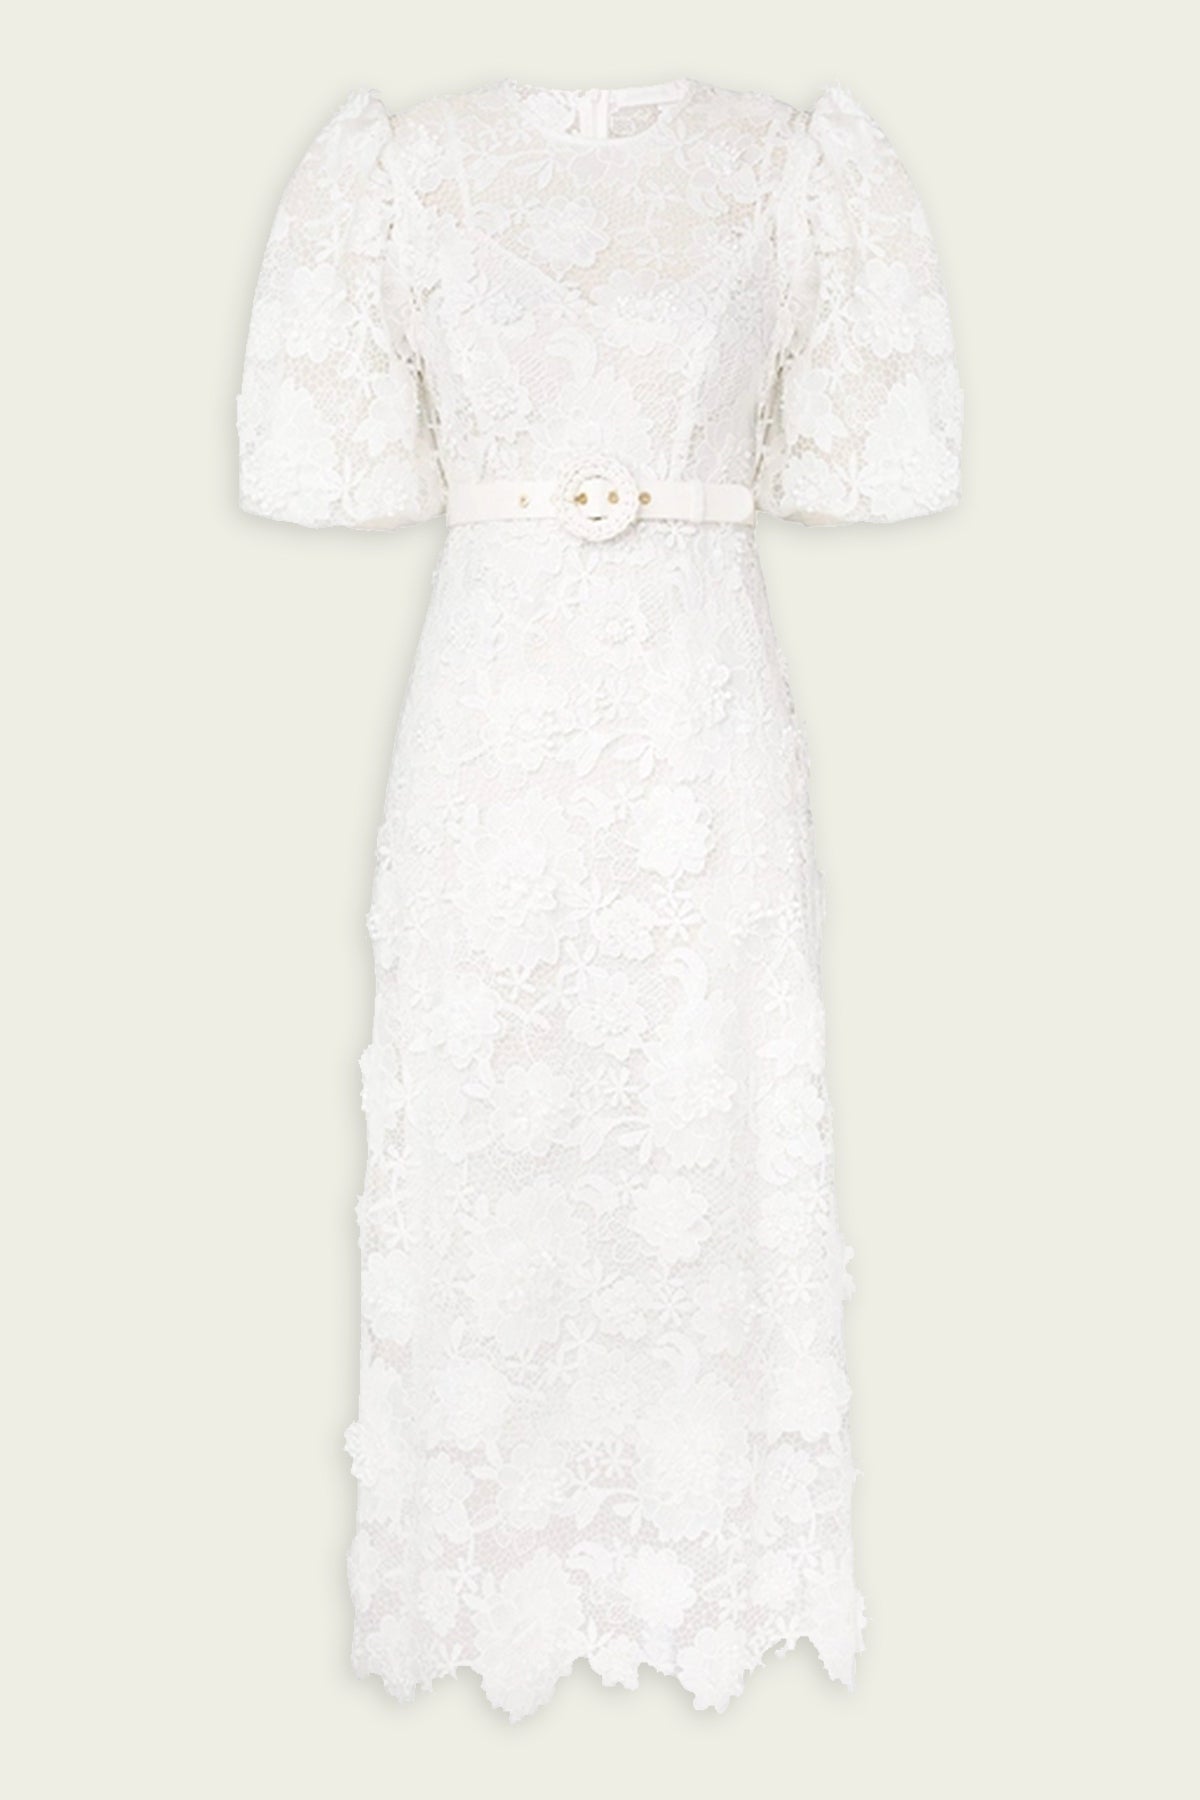 Halliday Lace Flower Dress in Ivory - shop-olivia.com